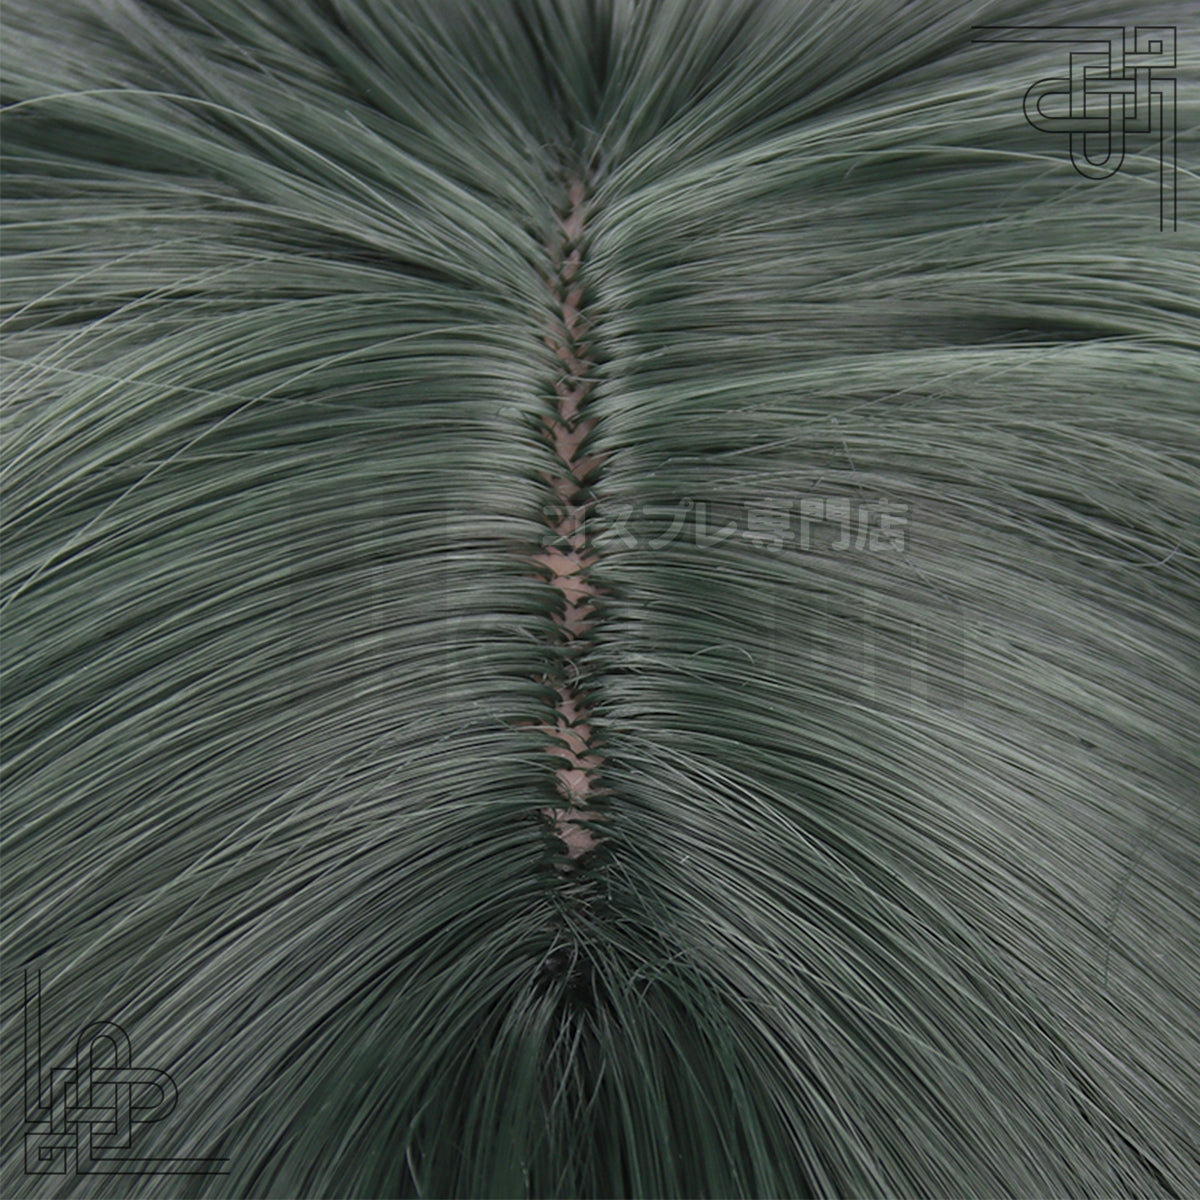 HOLOUN Blue Lock Manga Anime Chigiri Cosplay Wig Rose Net Synthetic Fiber Green